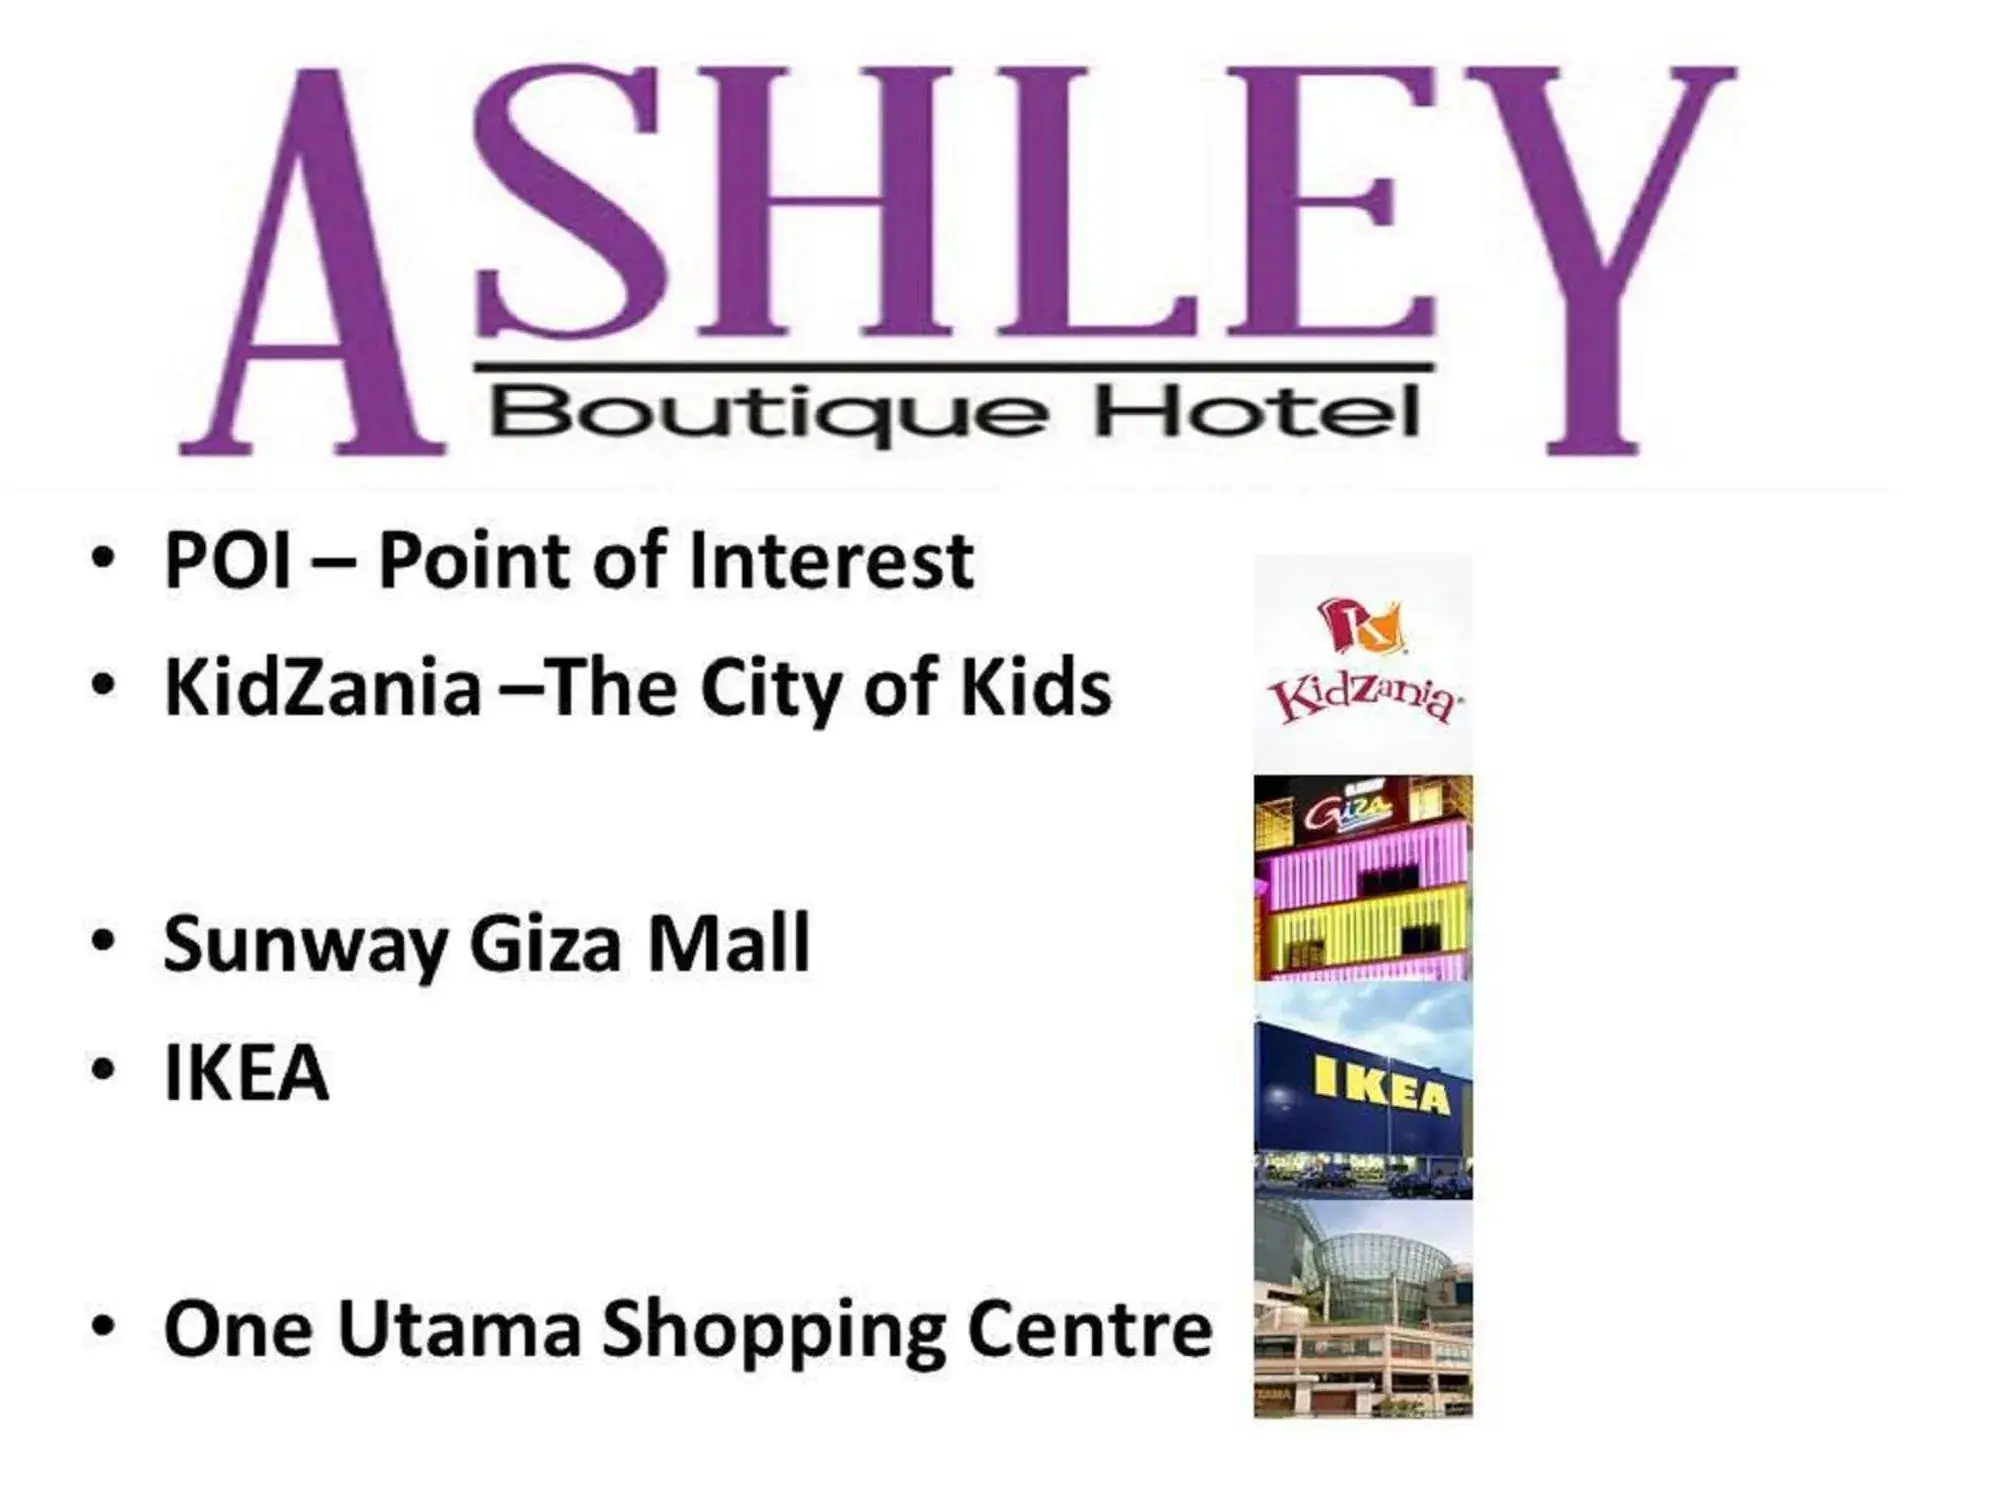 Ashley Boutique Hotel